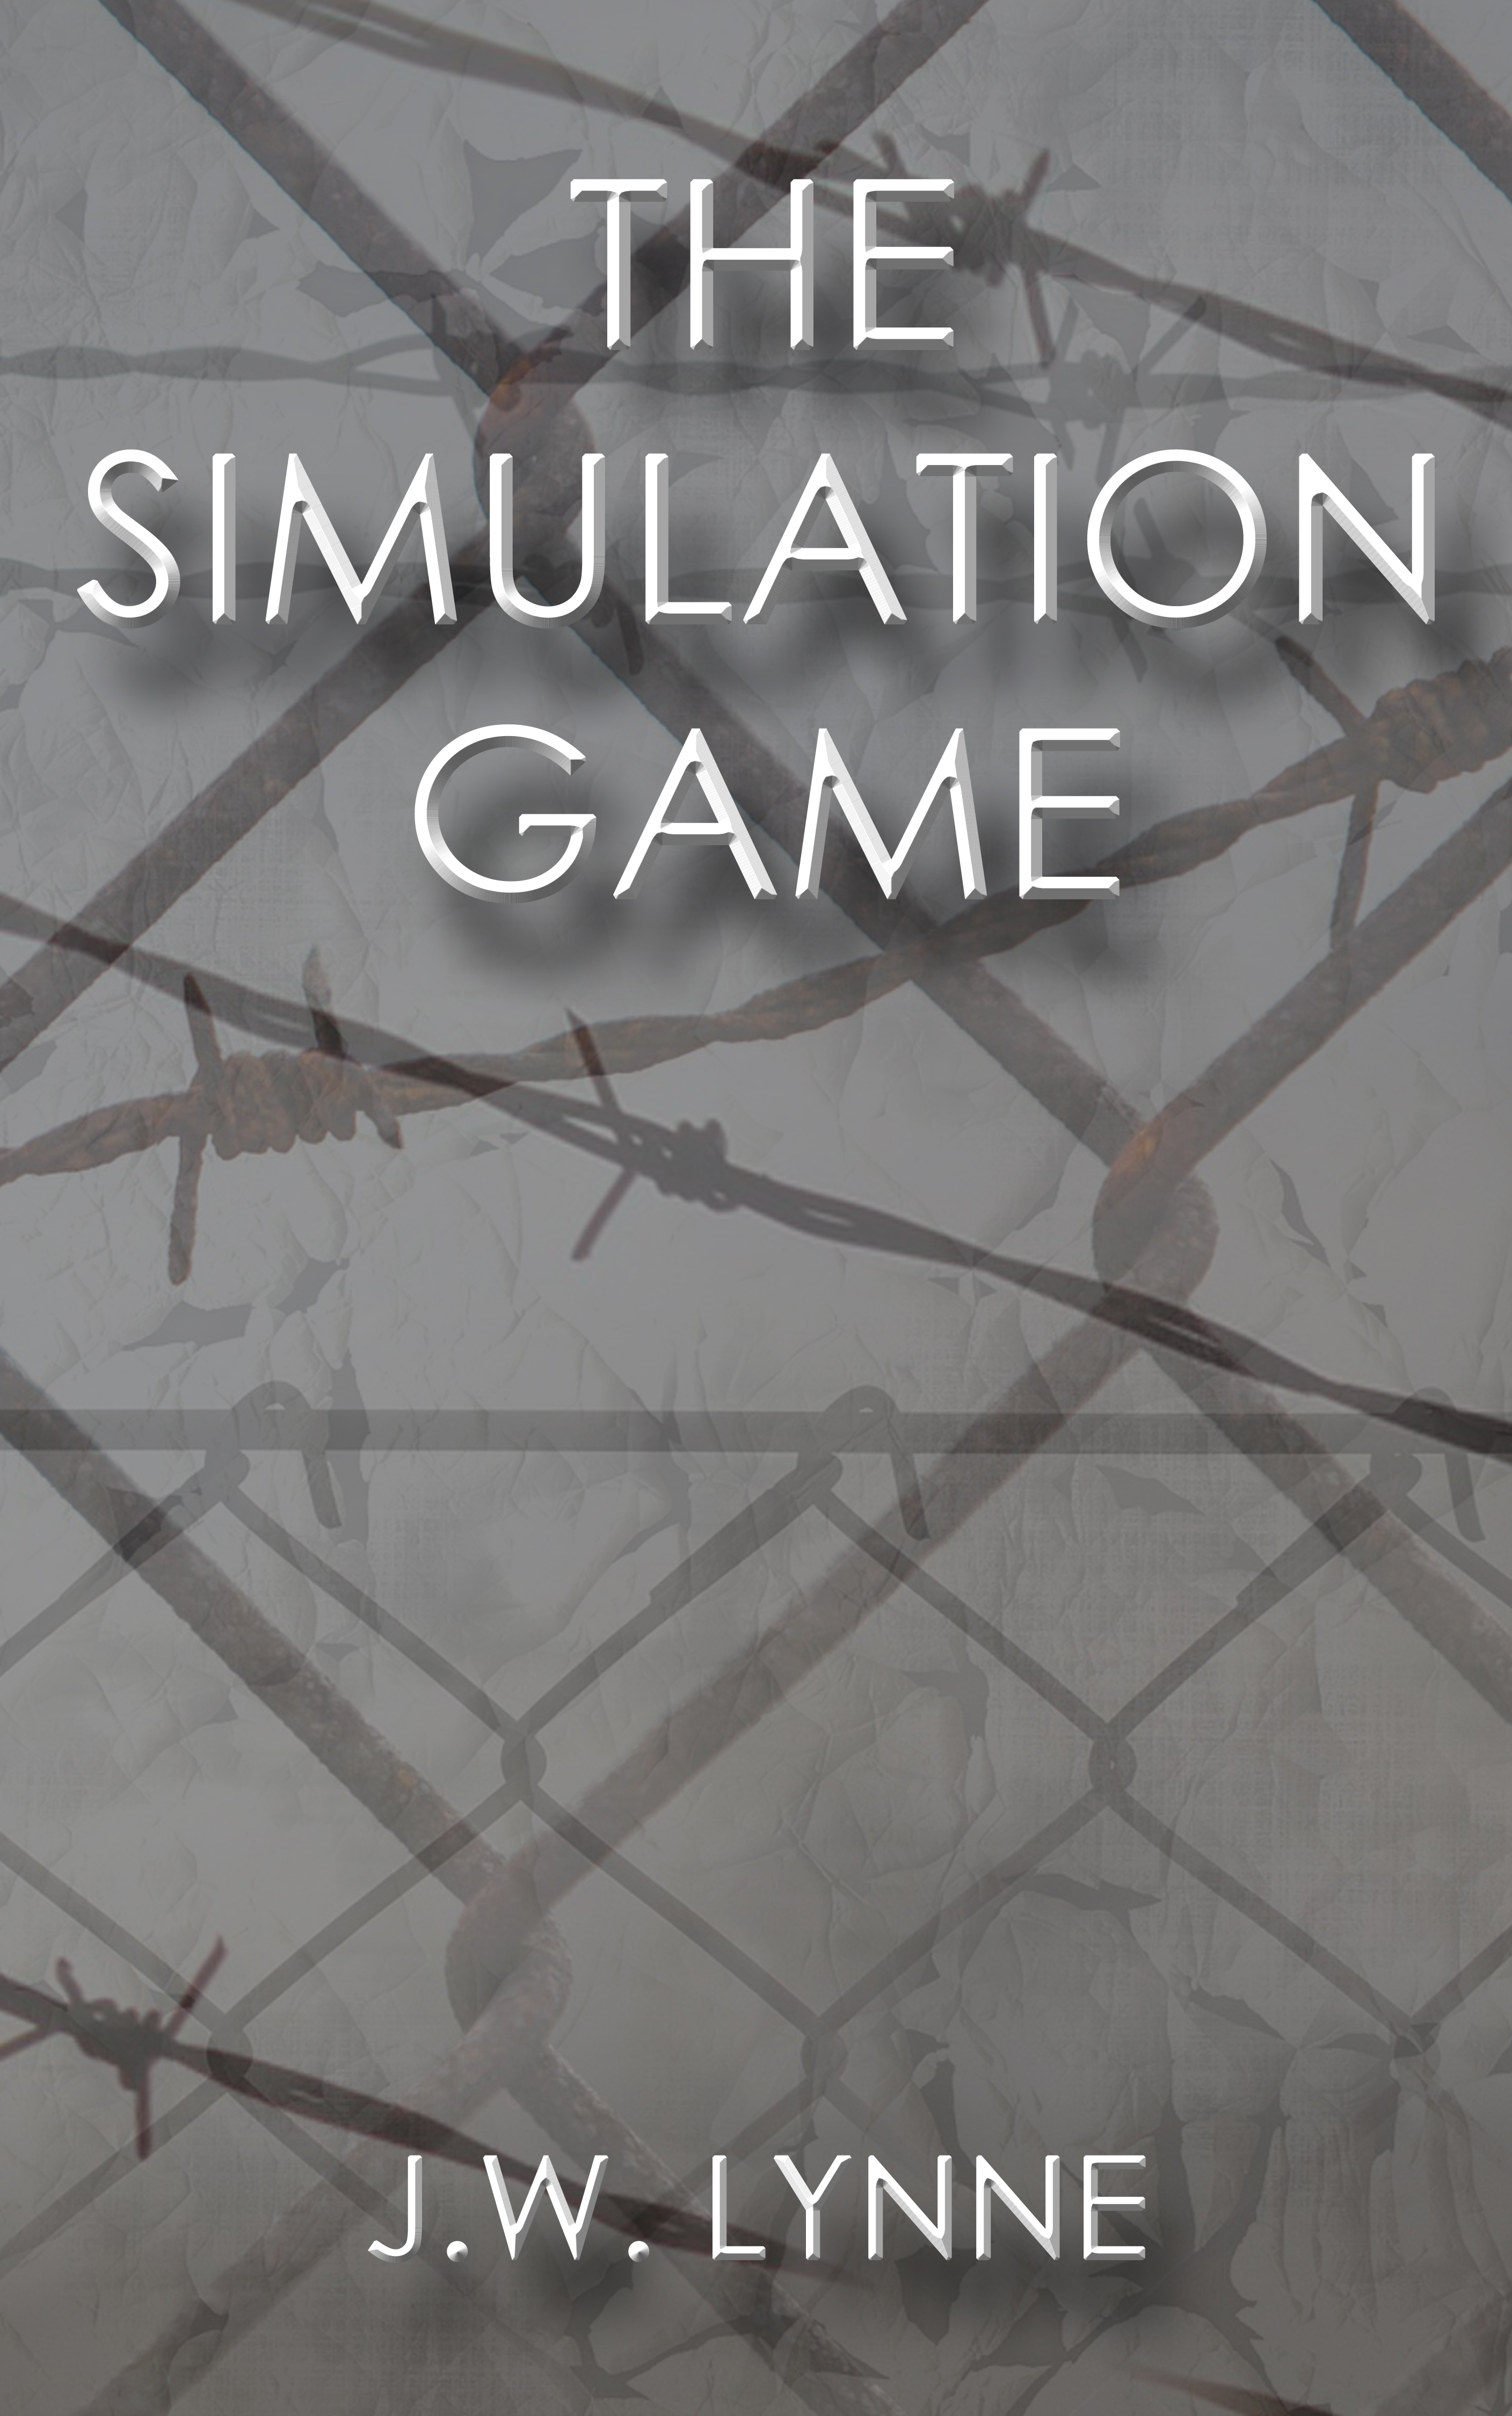 The Simulation Game by J.W. Lynne